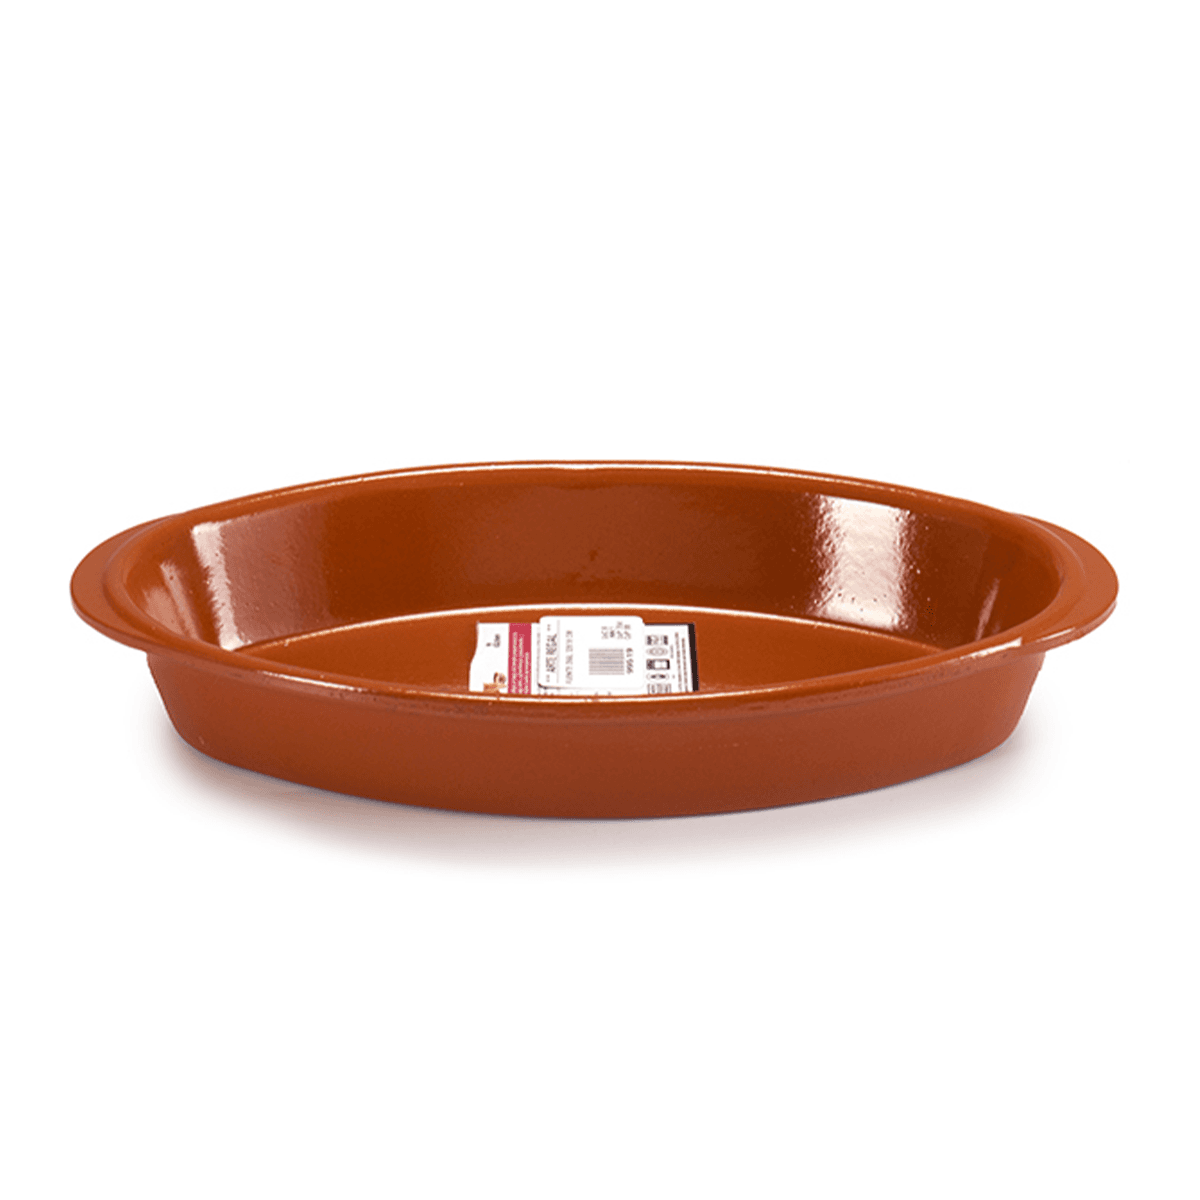 صحن فخار بيضاوي عميق لون بني 32 سم من آرت ريجال صناعة اسبانيا Arte Regal Brown Clay Deep Oval Plate